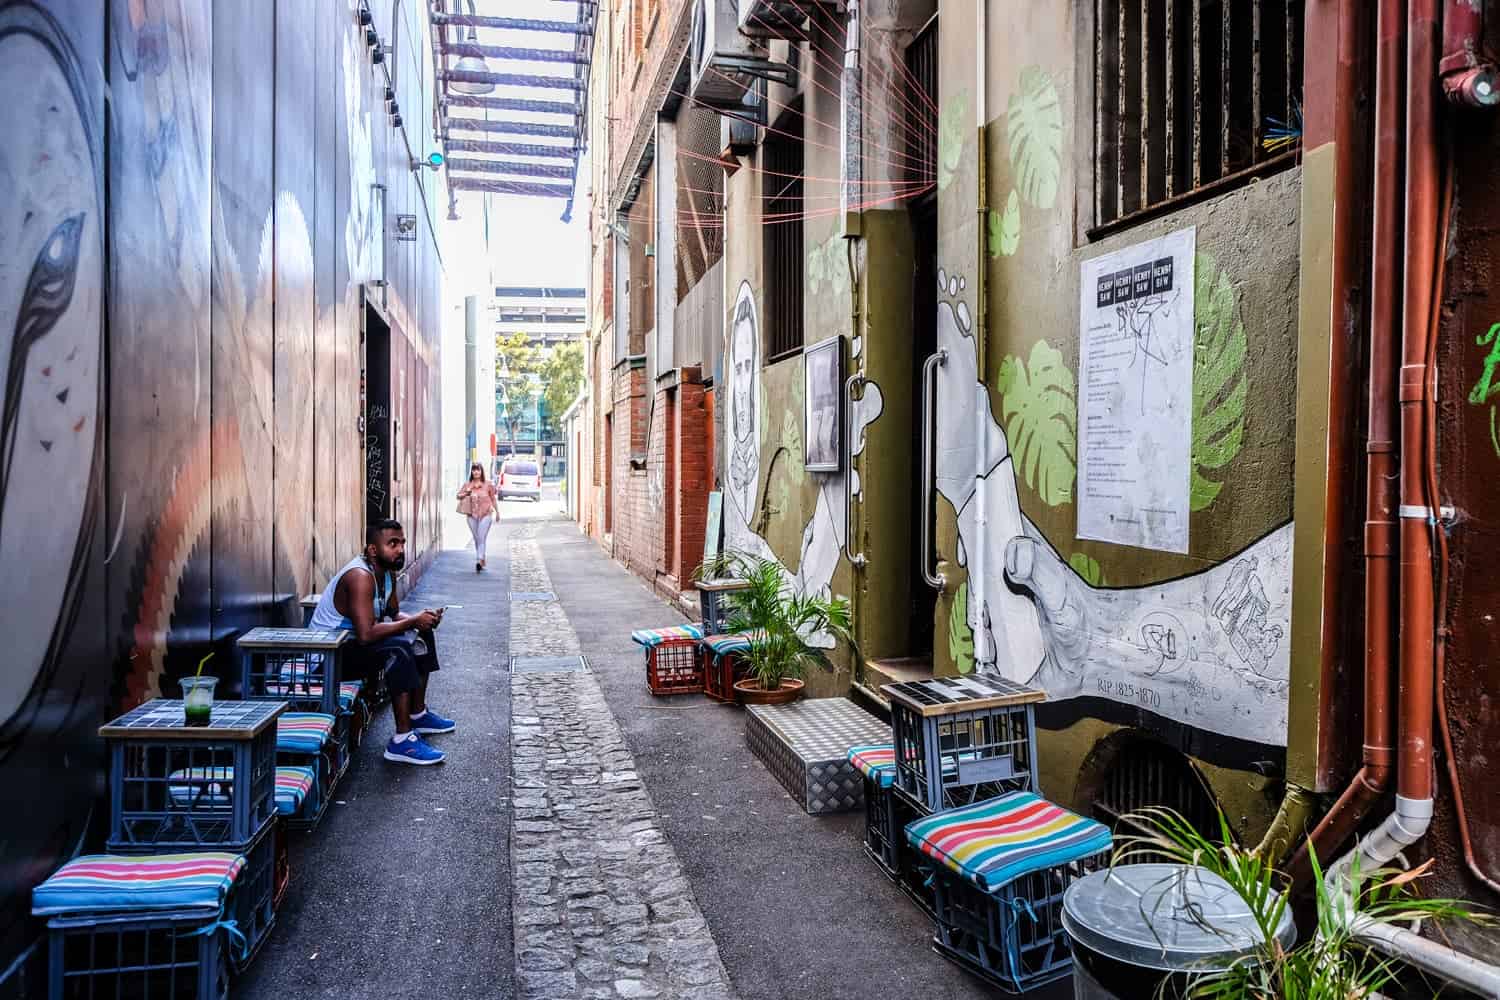 Street art lines every wall of the narrow alleyways in Northbridge, Perth